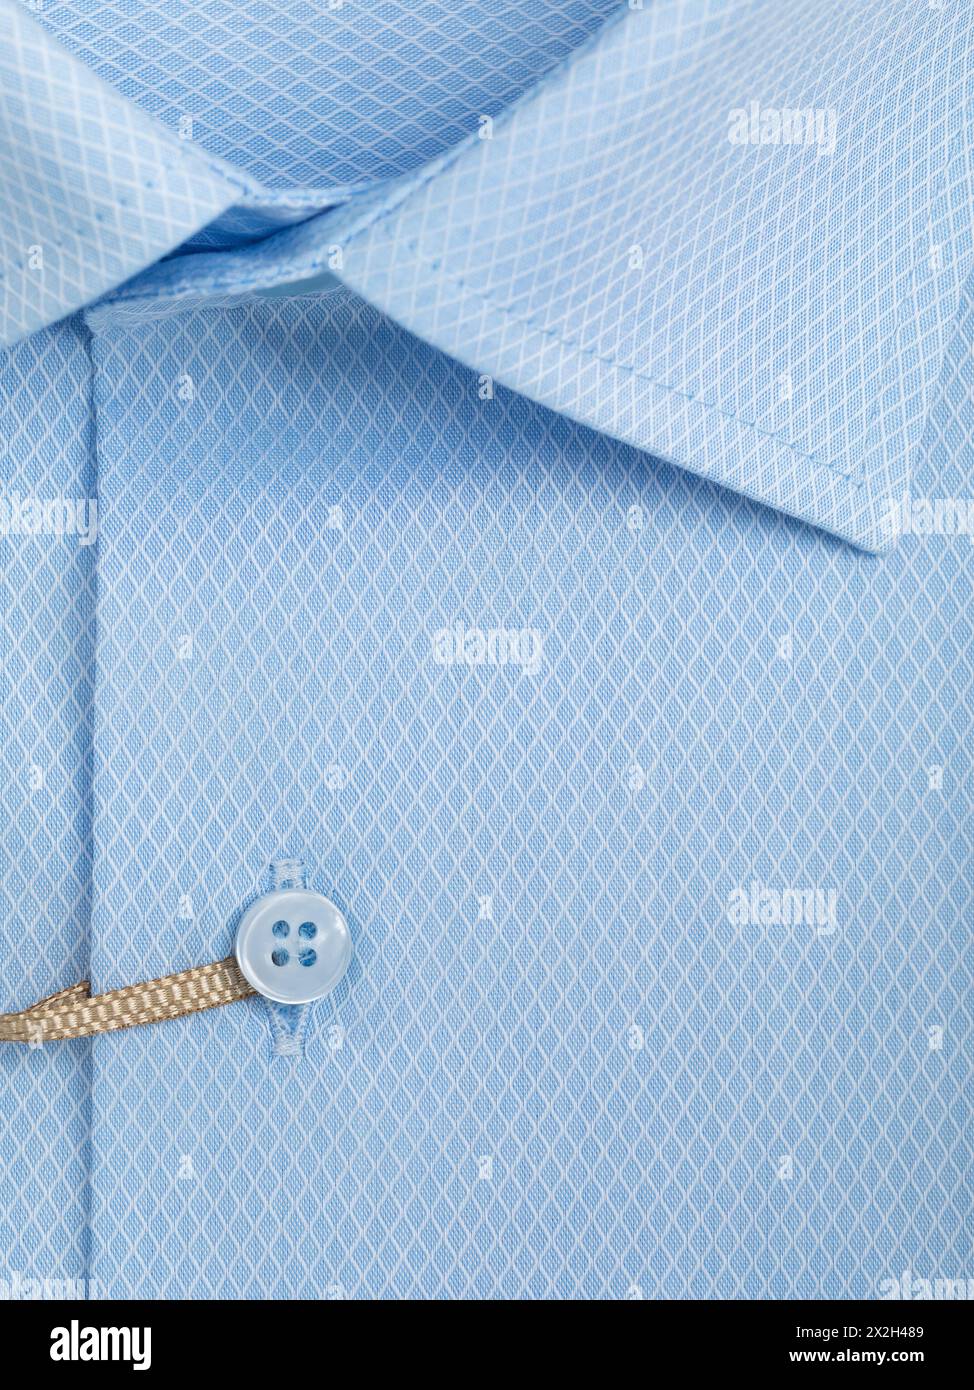 Close-up of a button placket on a light blue diamond shaped mesh shirt Stock Photo